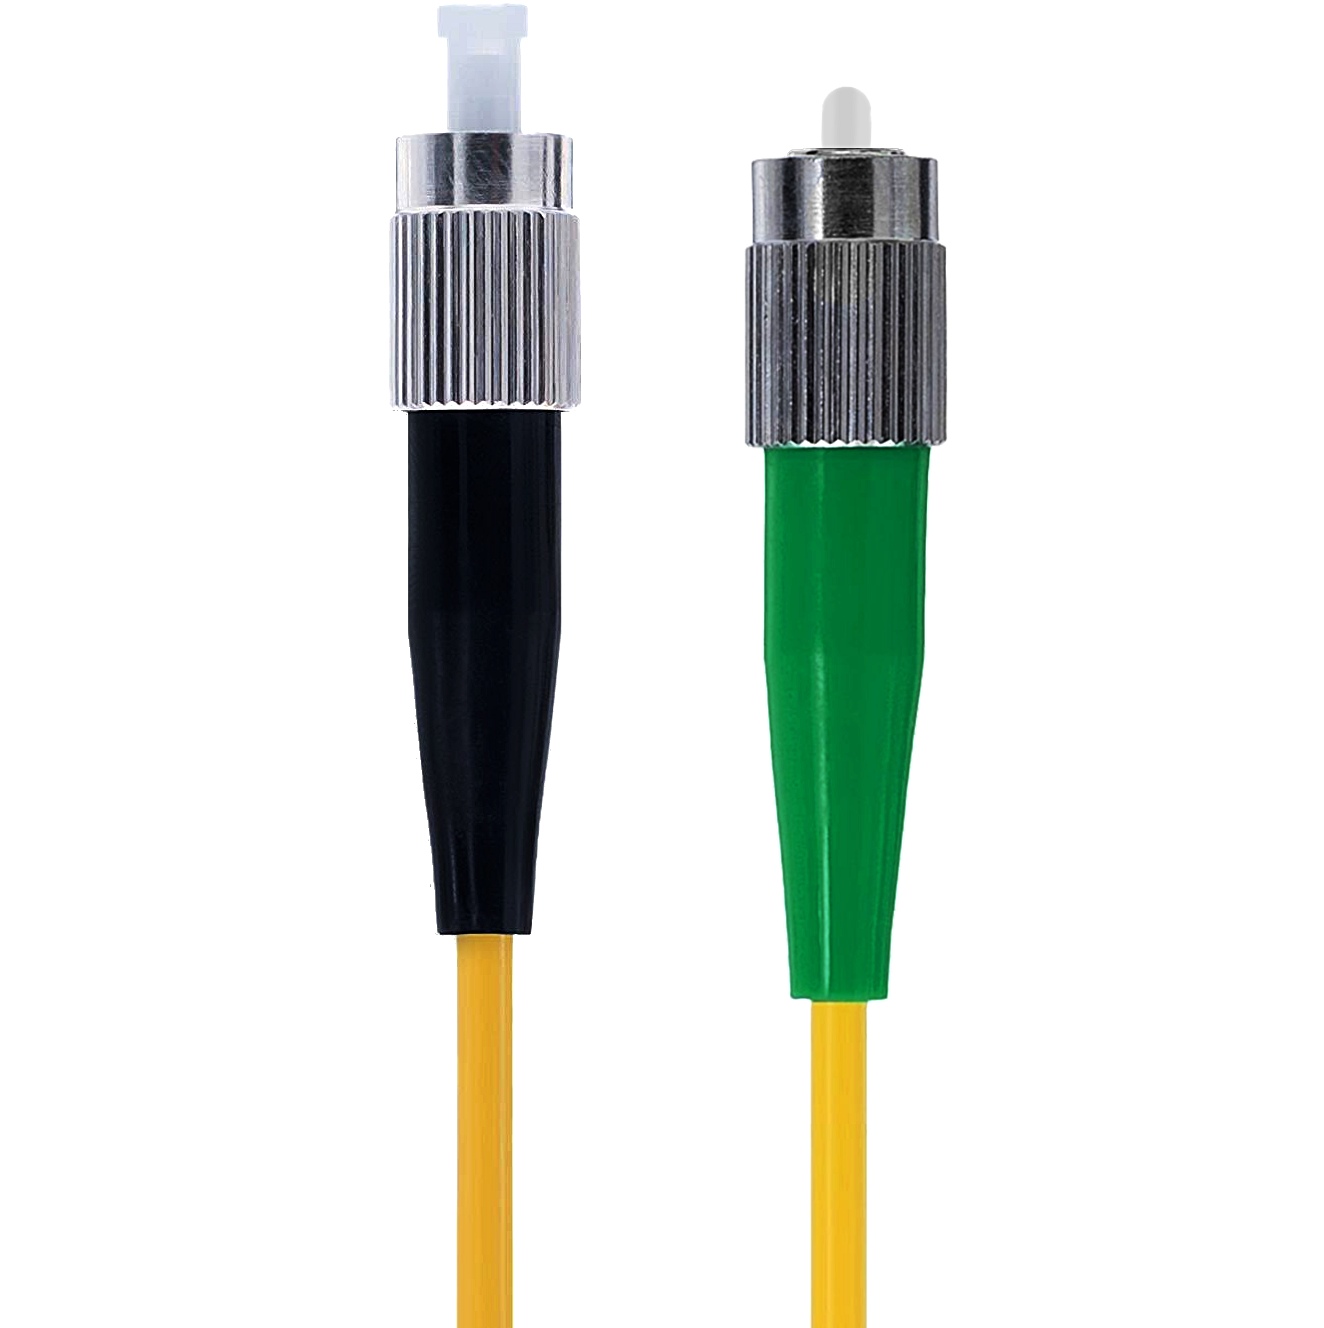 1M,SC/PC to FC/PC,Duplex,SingleMode,Optical Fiber Cable Patch Cord SC-FC Jumper 